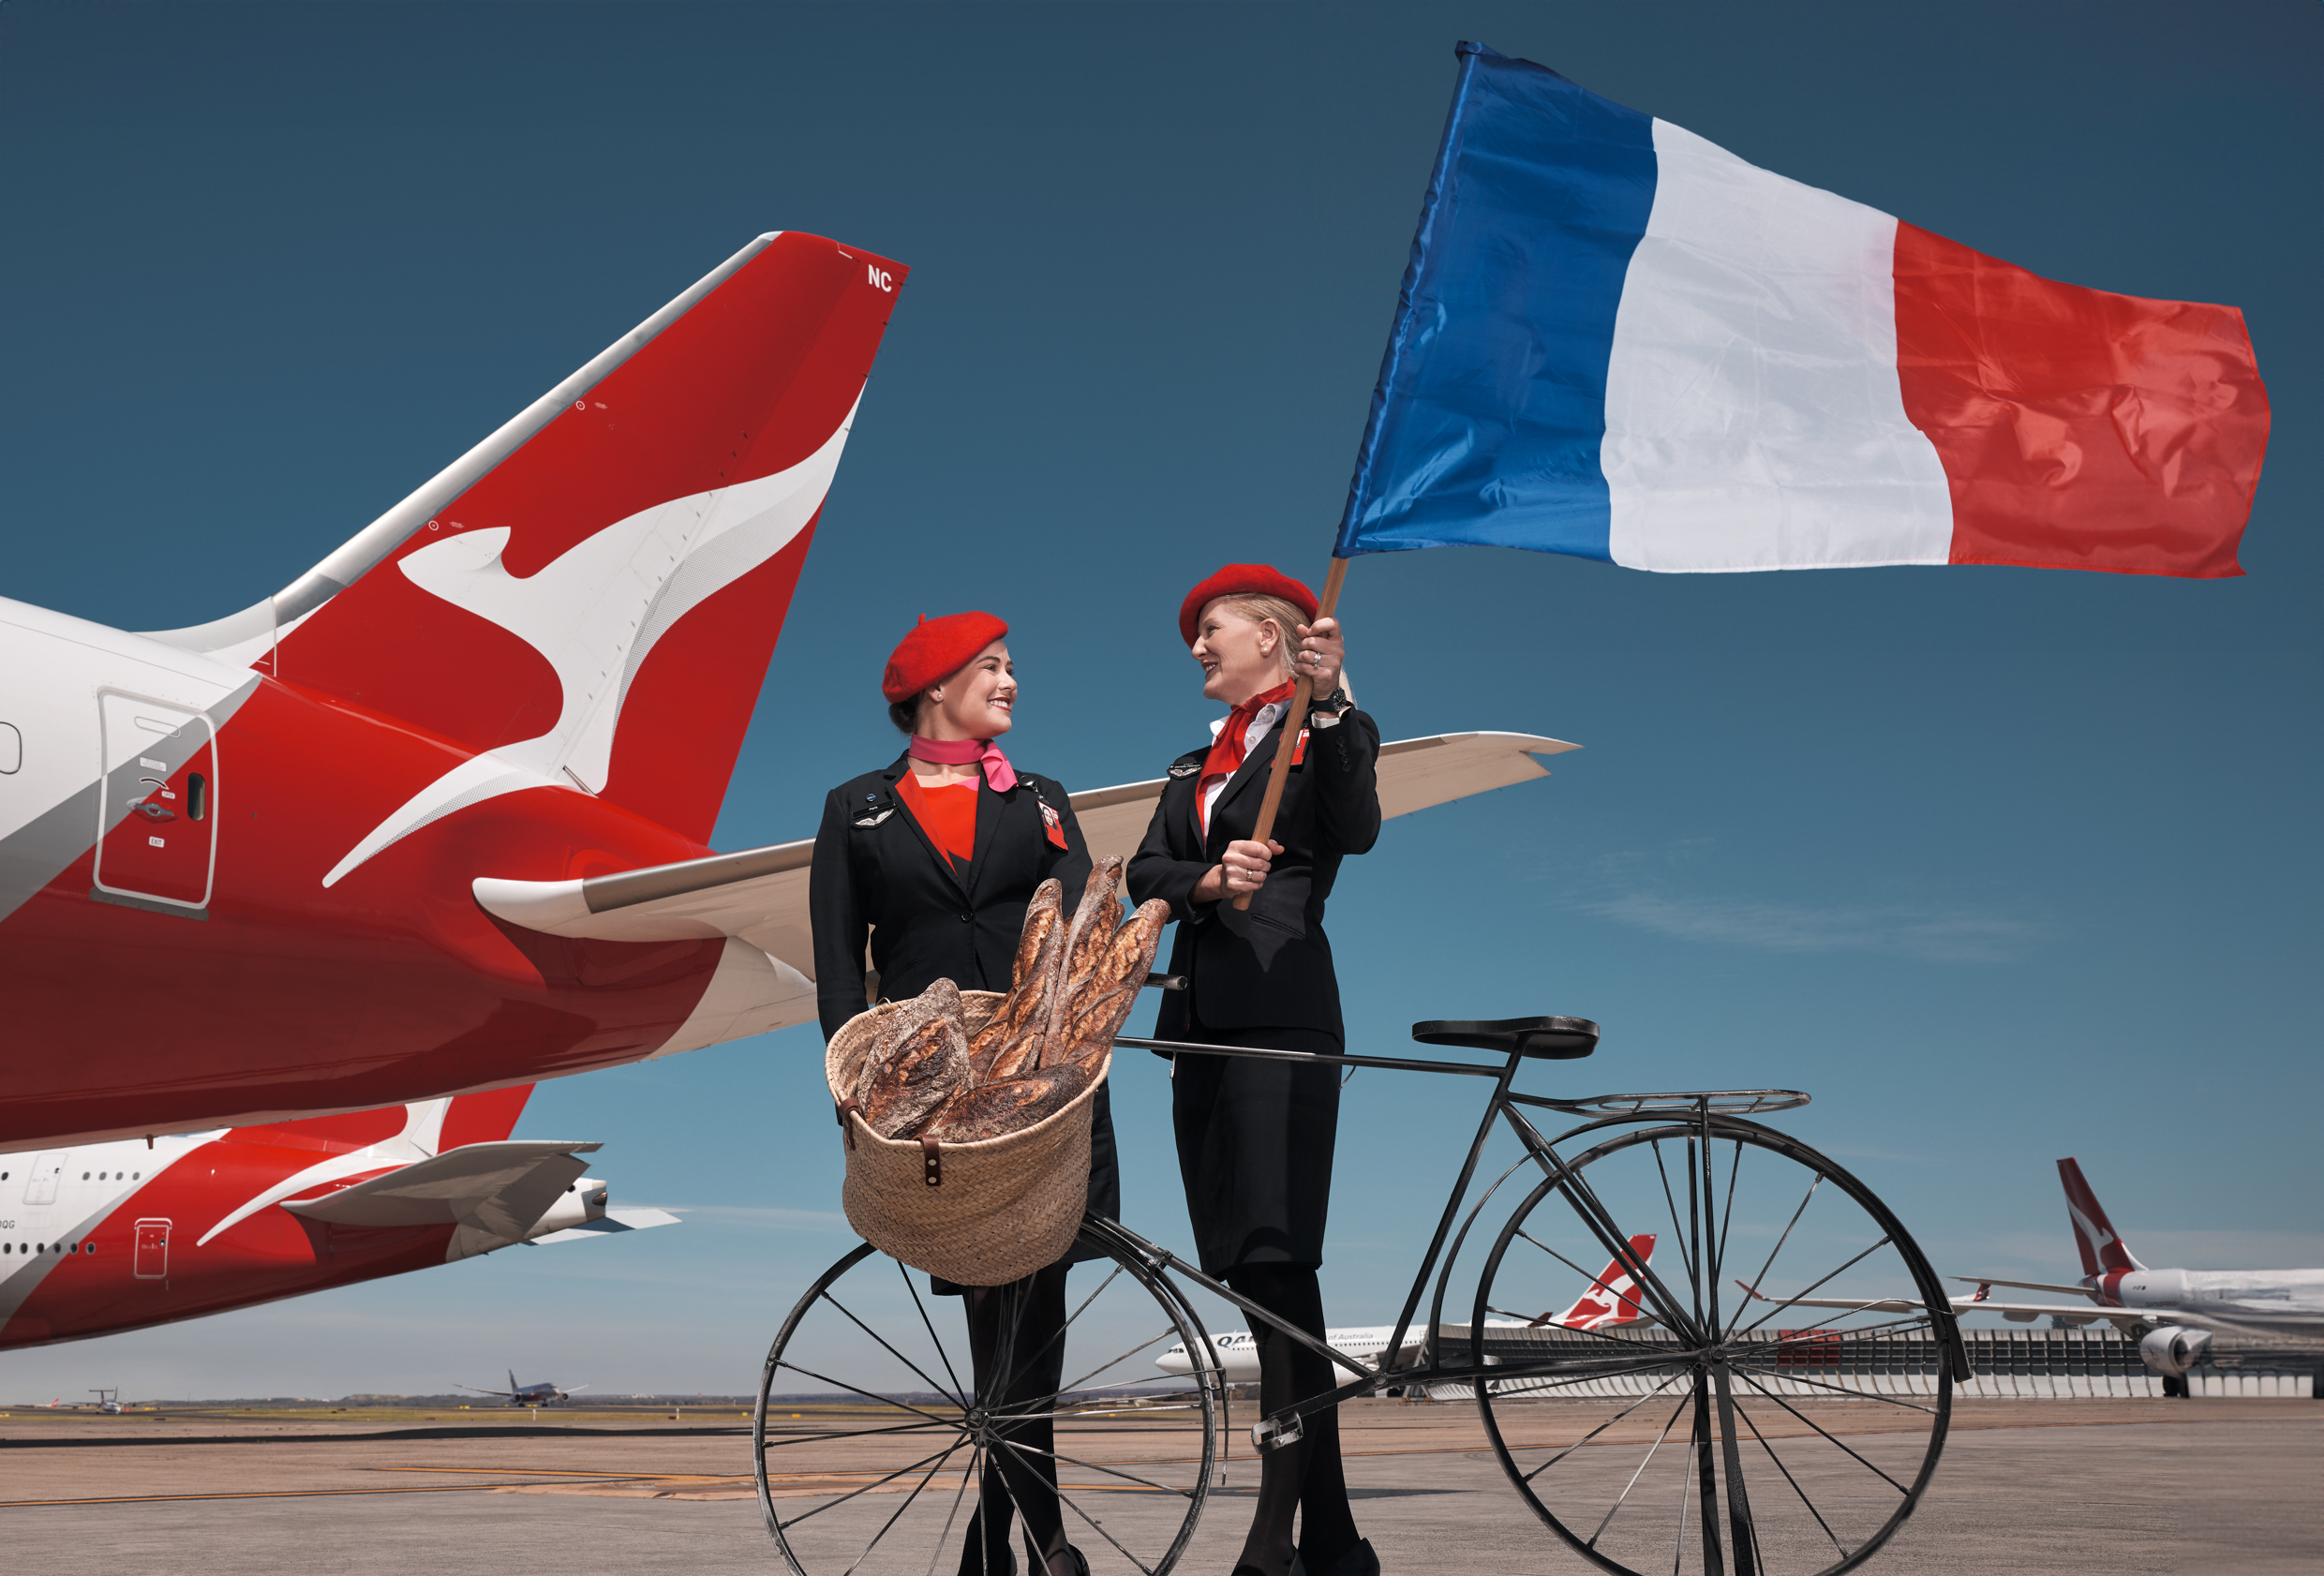 Qantas Adds Destination Joy with Direct Flights from Perth to Paris